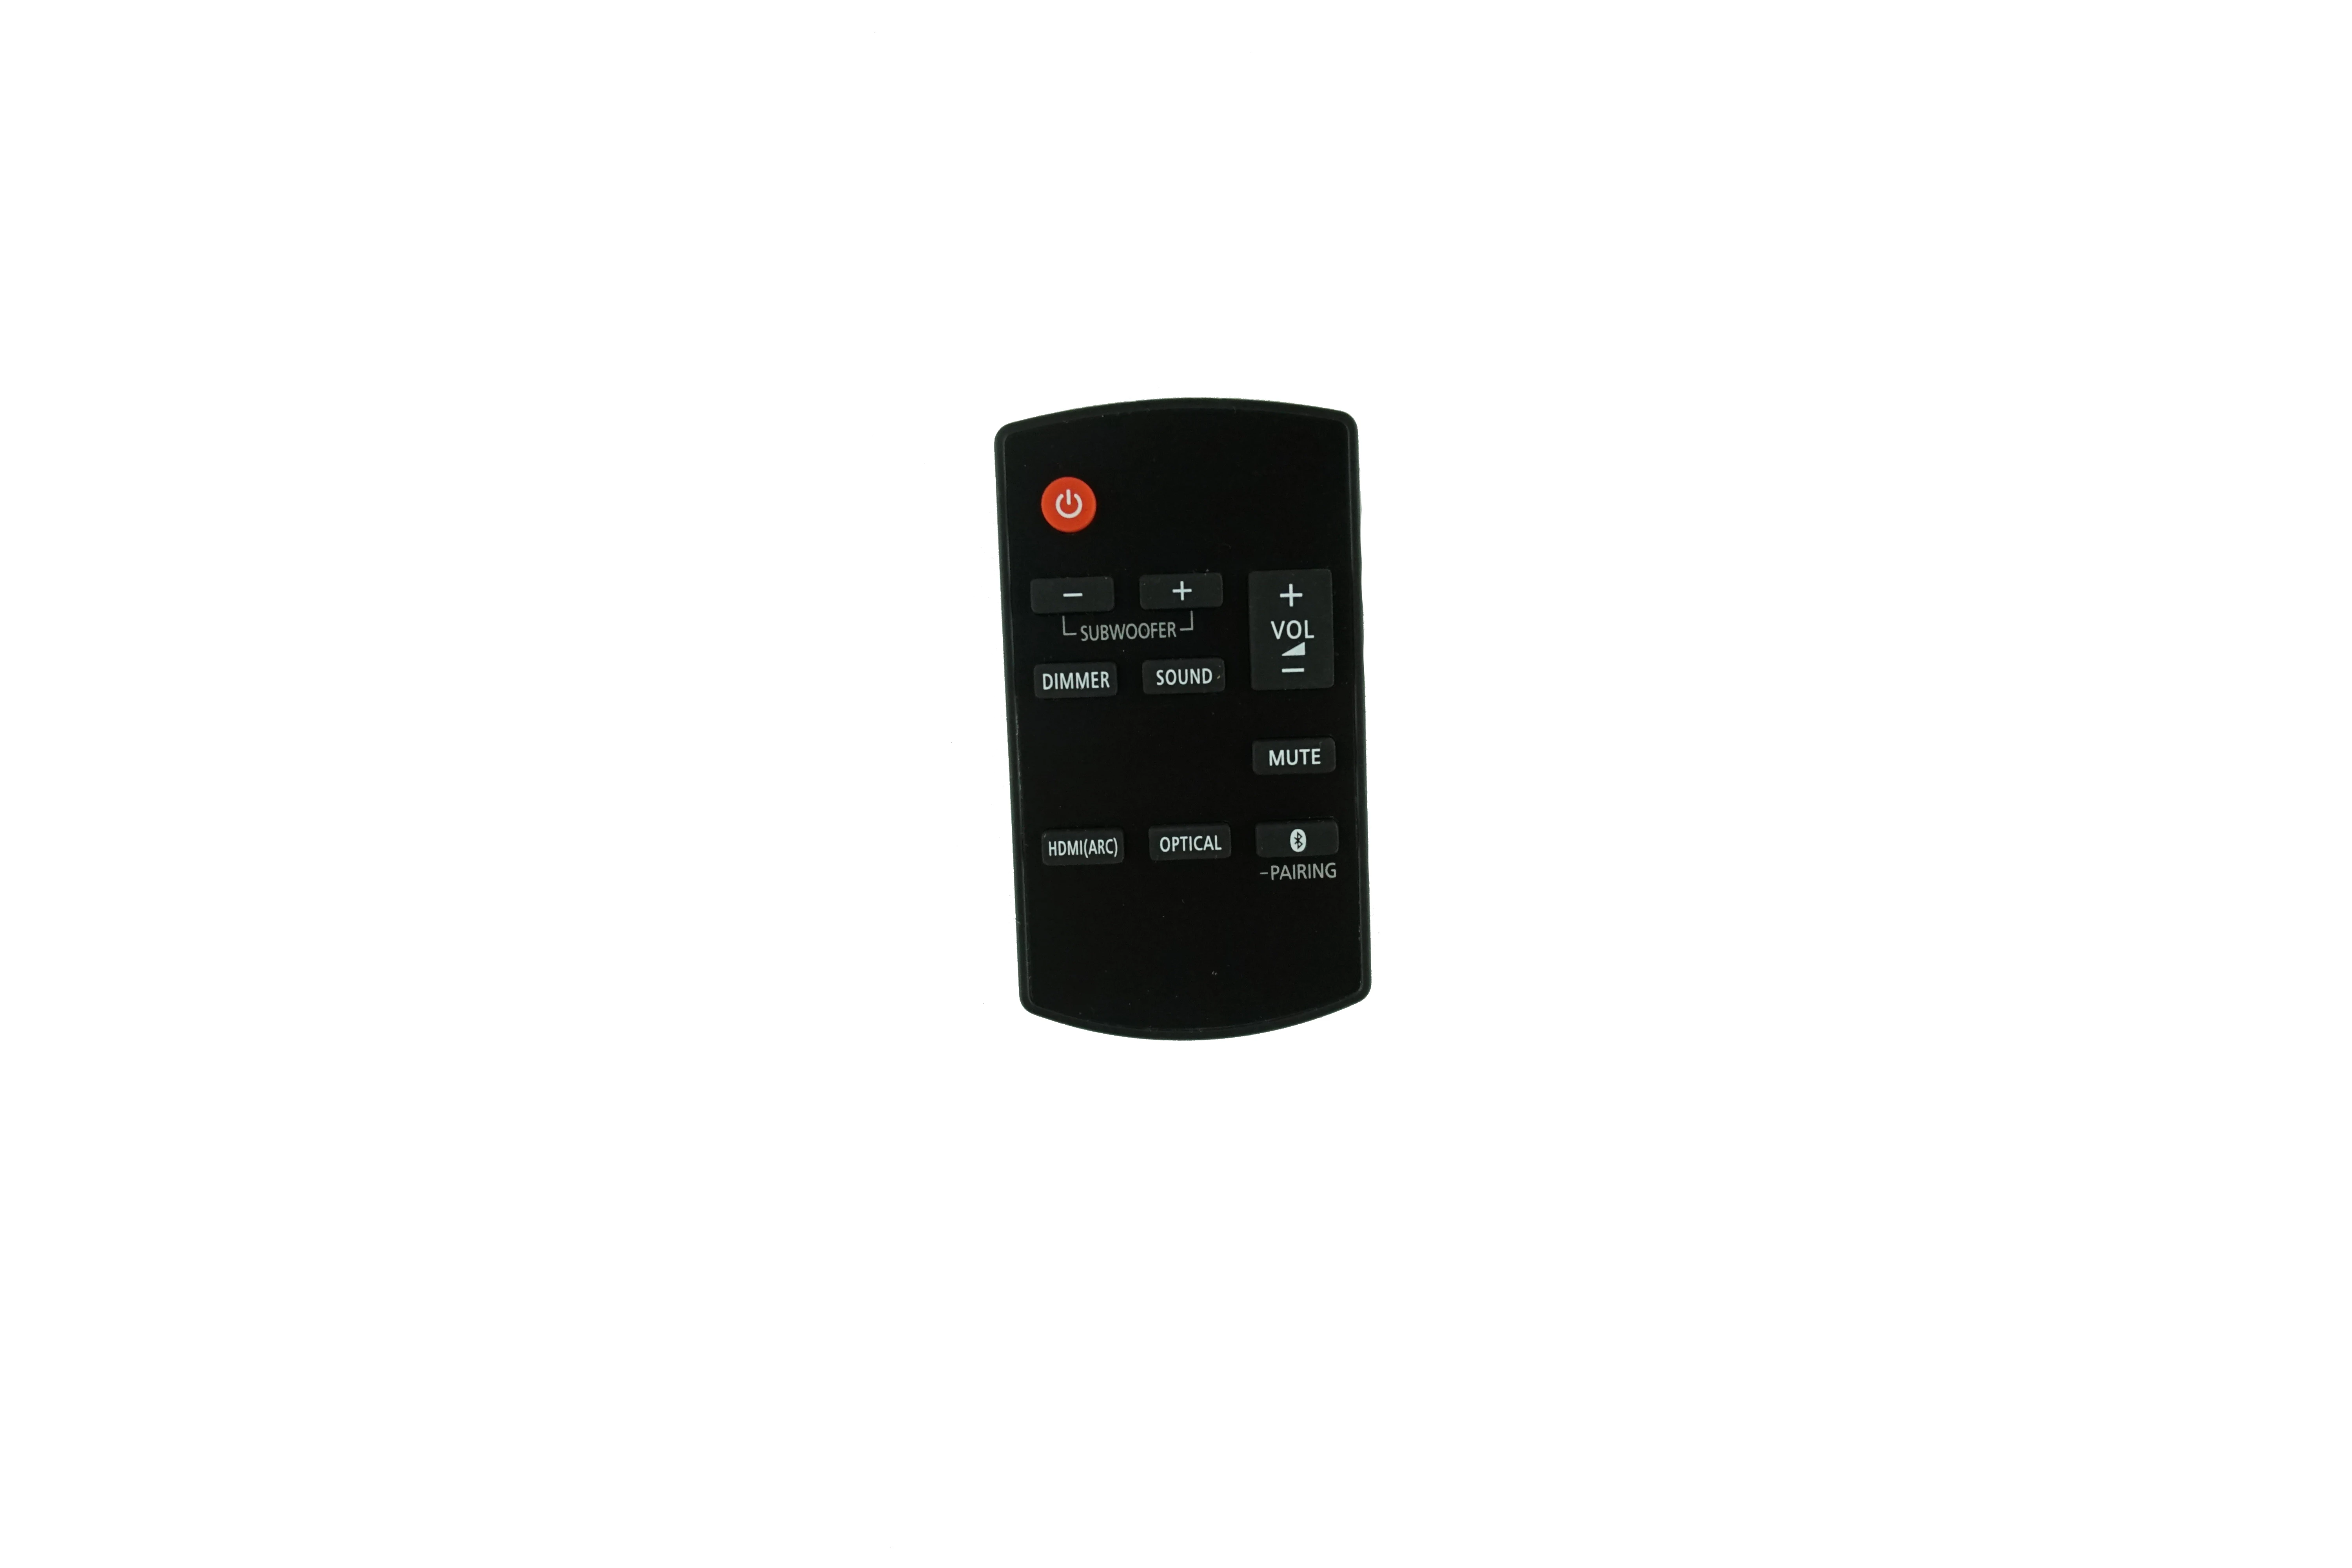 Mando a distancia para Panasonic N2QAYC000126 SC-HTB258, SC-HTB250, Home Theater, TV, barra de sonido, sistema de Audio